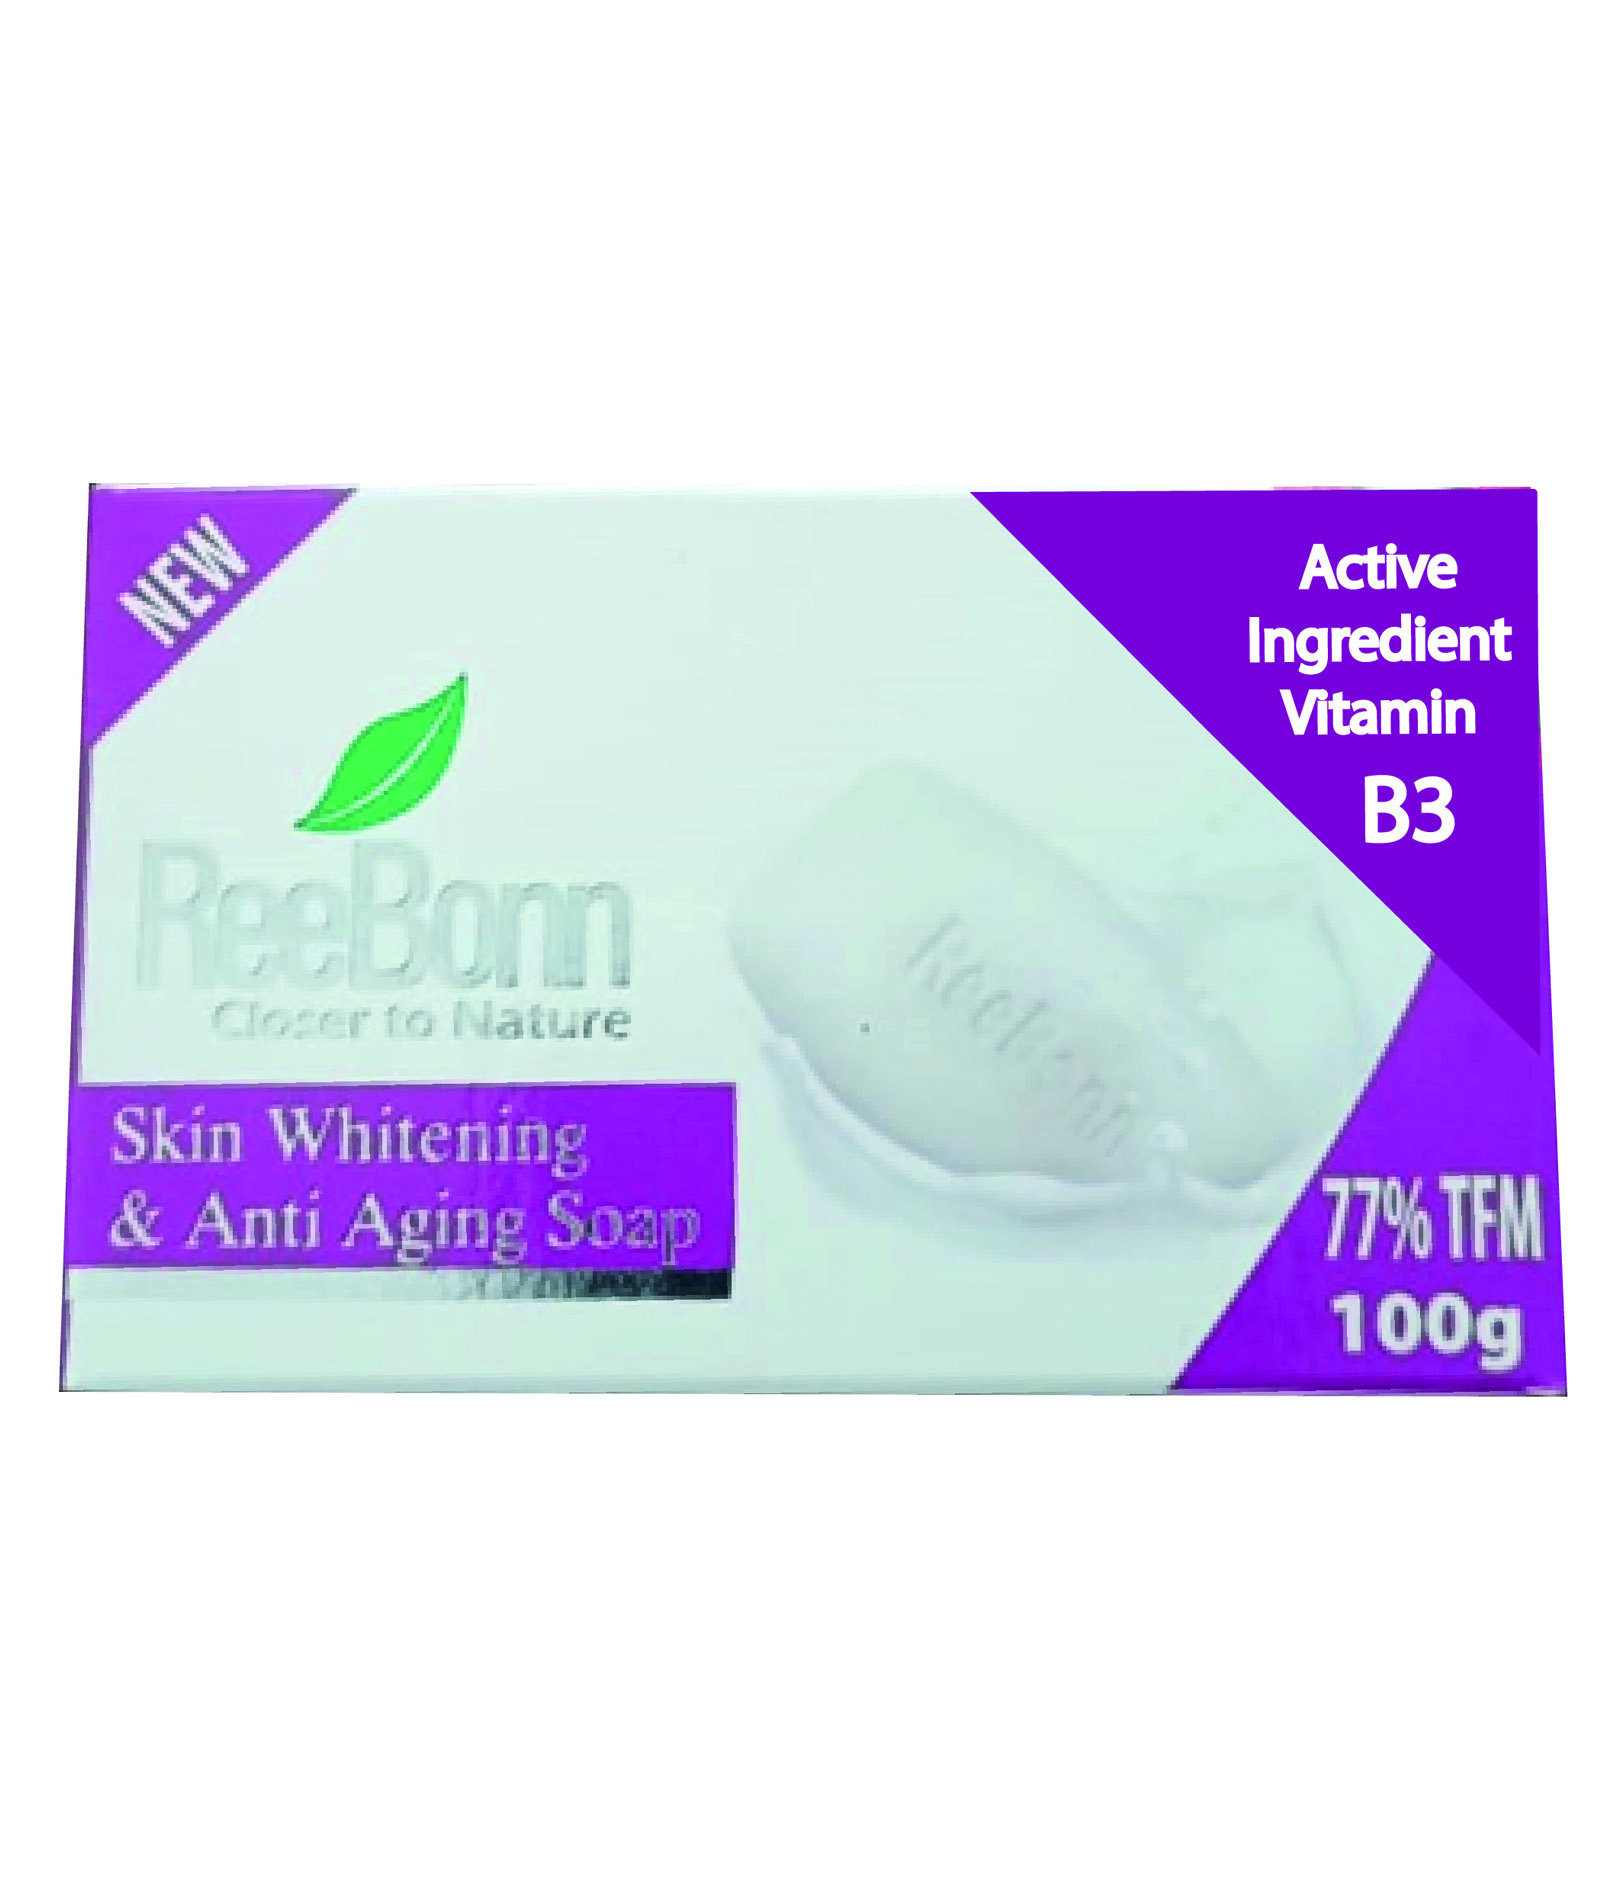 reebonn-cosmetics-anti-aging-soap-5